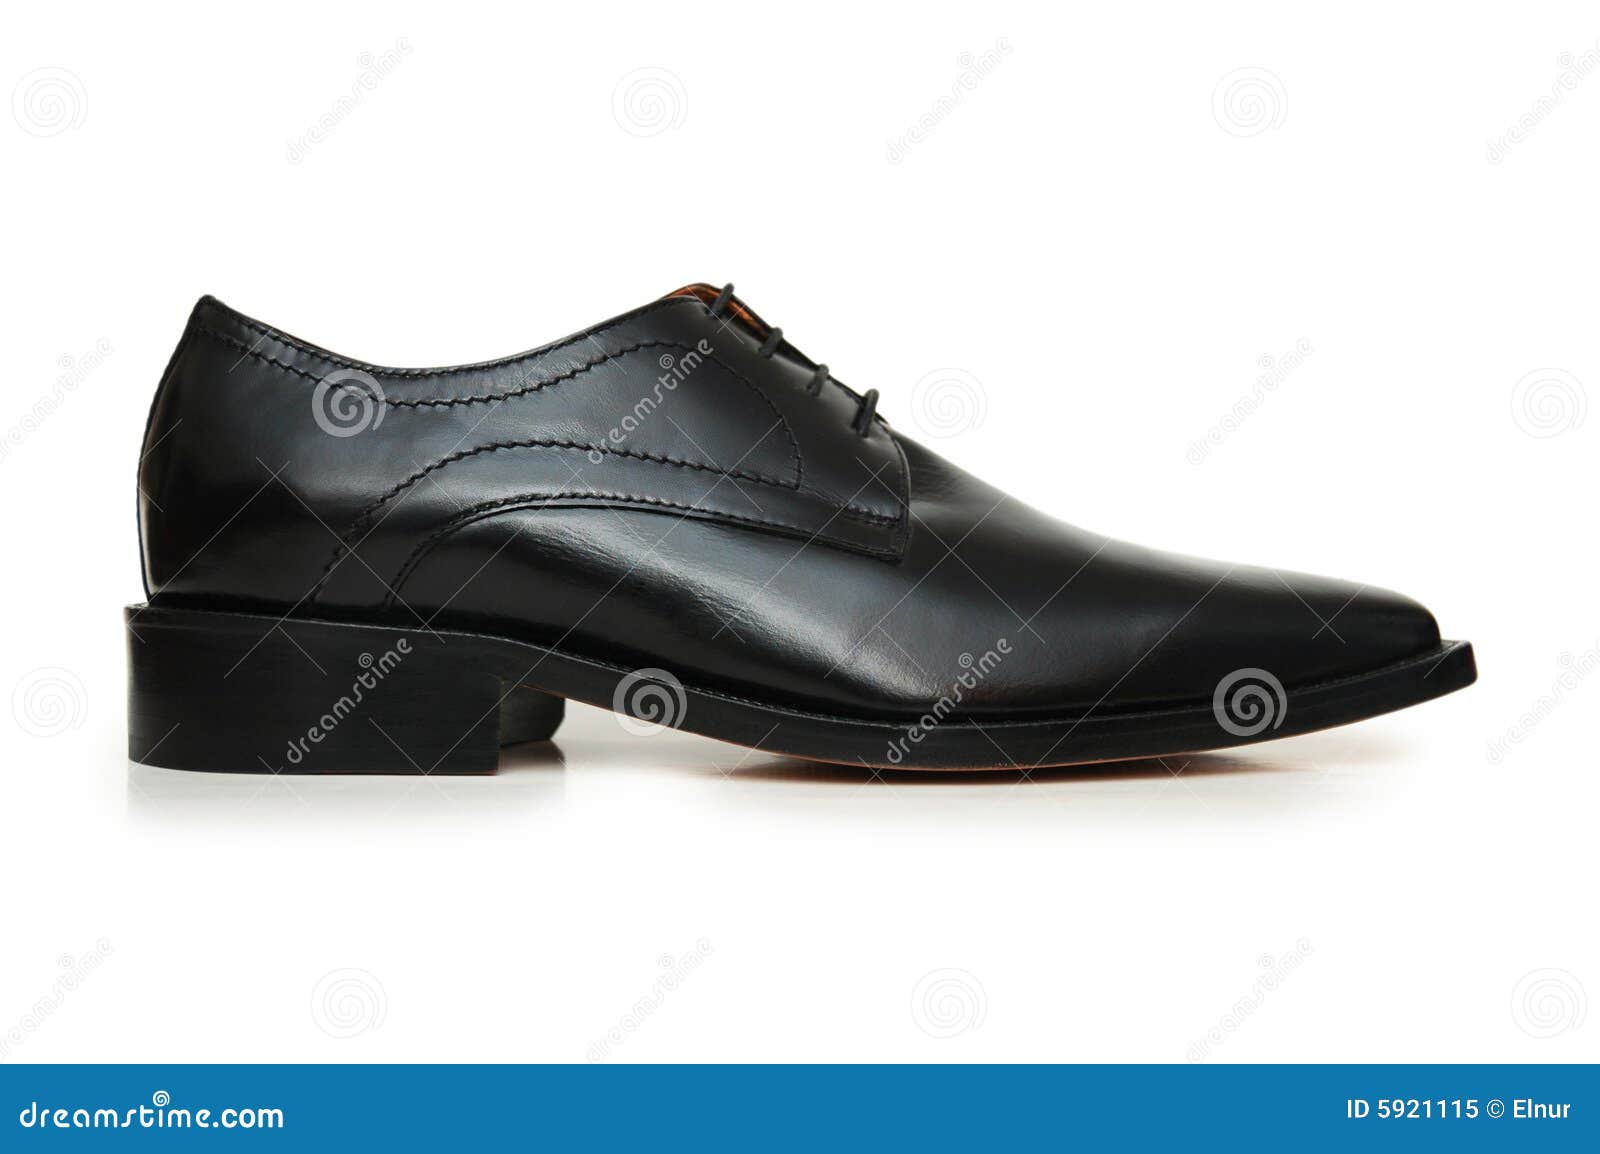 Black Male Shoes Isolated on the White Background Stock Image - Image ...